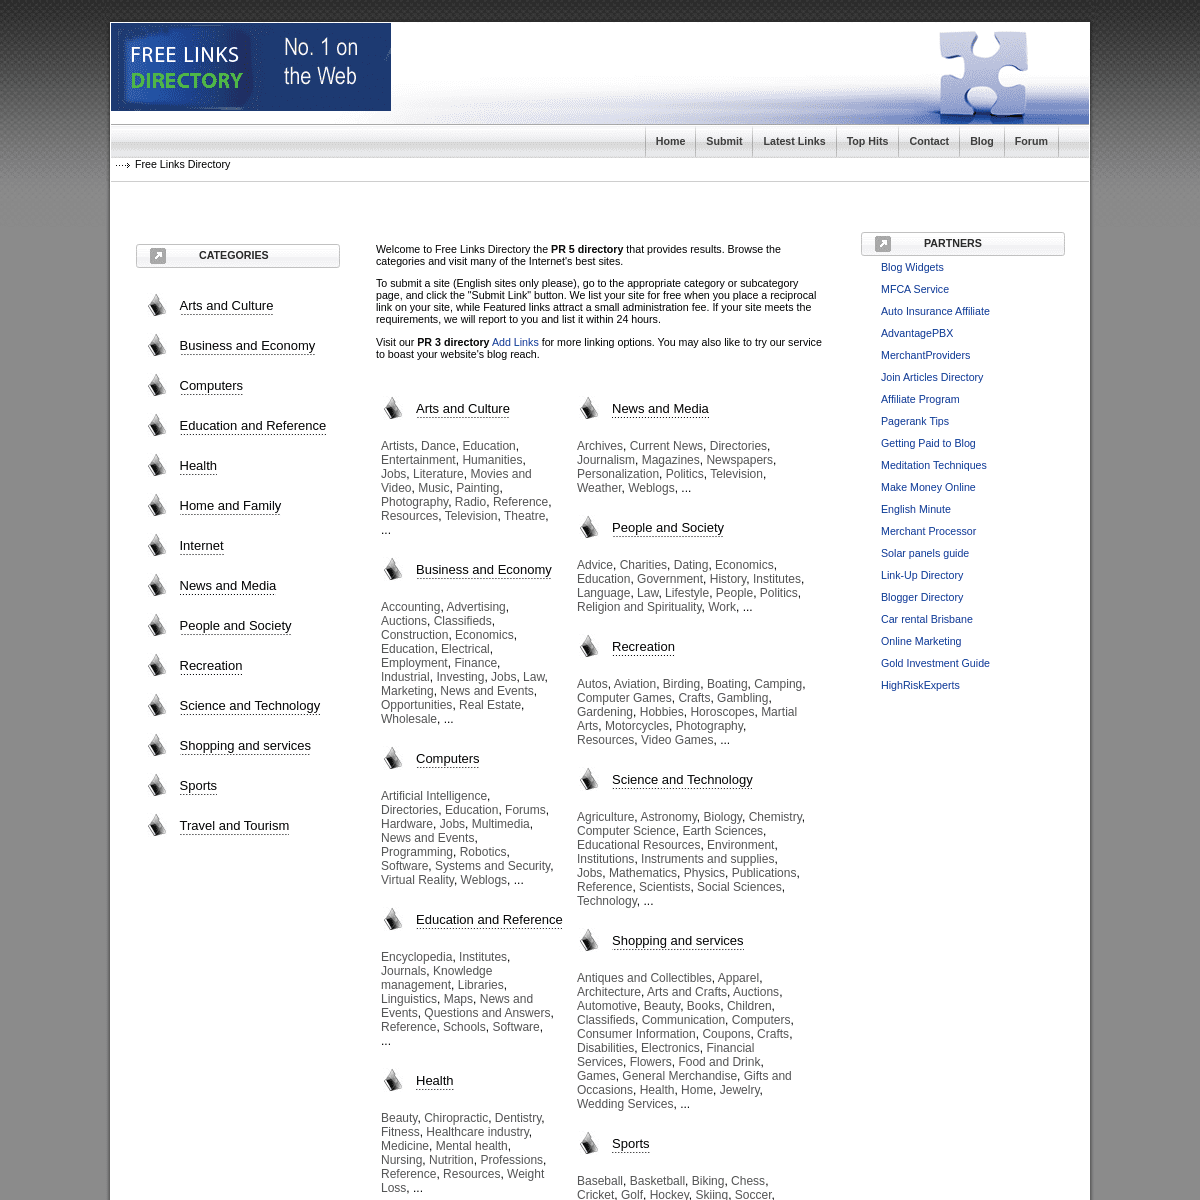 A complete backup of freelinksdirectory.net